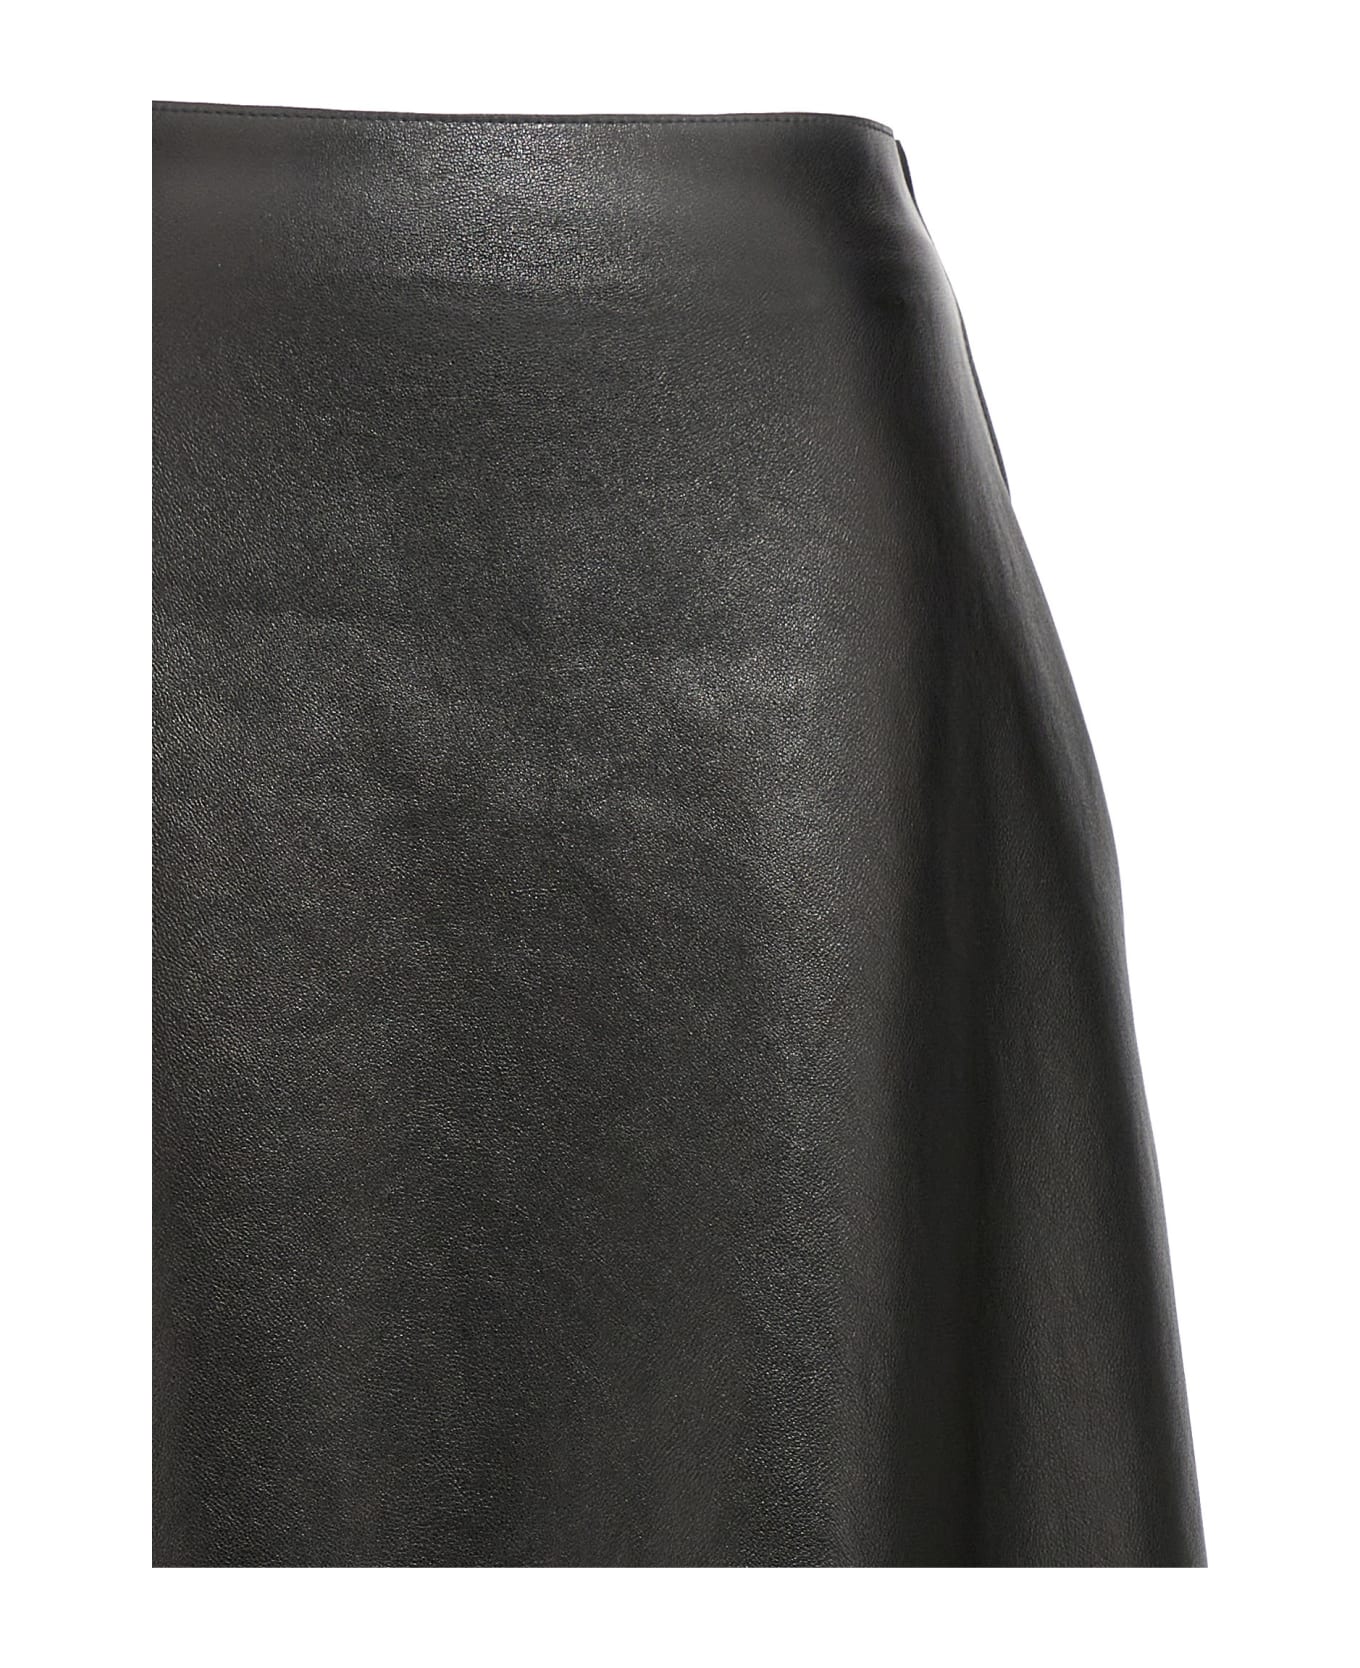 Balenciaga 'a-line' Skirt - Black  